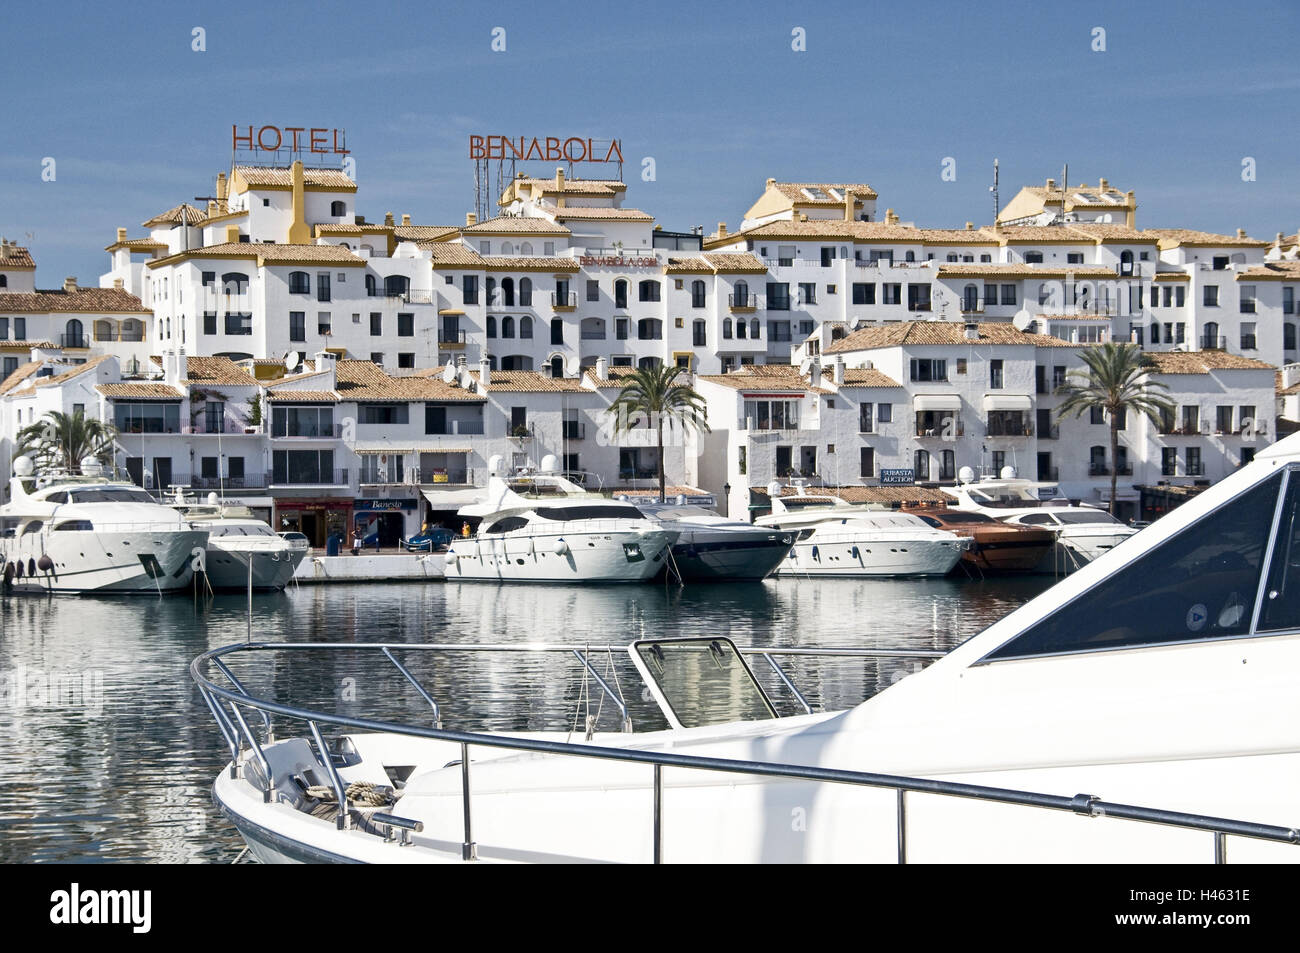 Spain, province Malaga, Andalusia, Marbella, Puerto Banus, harbour